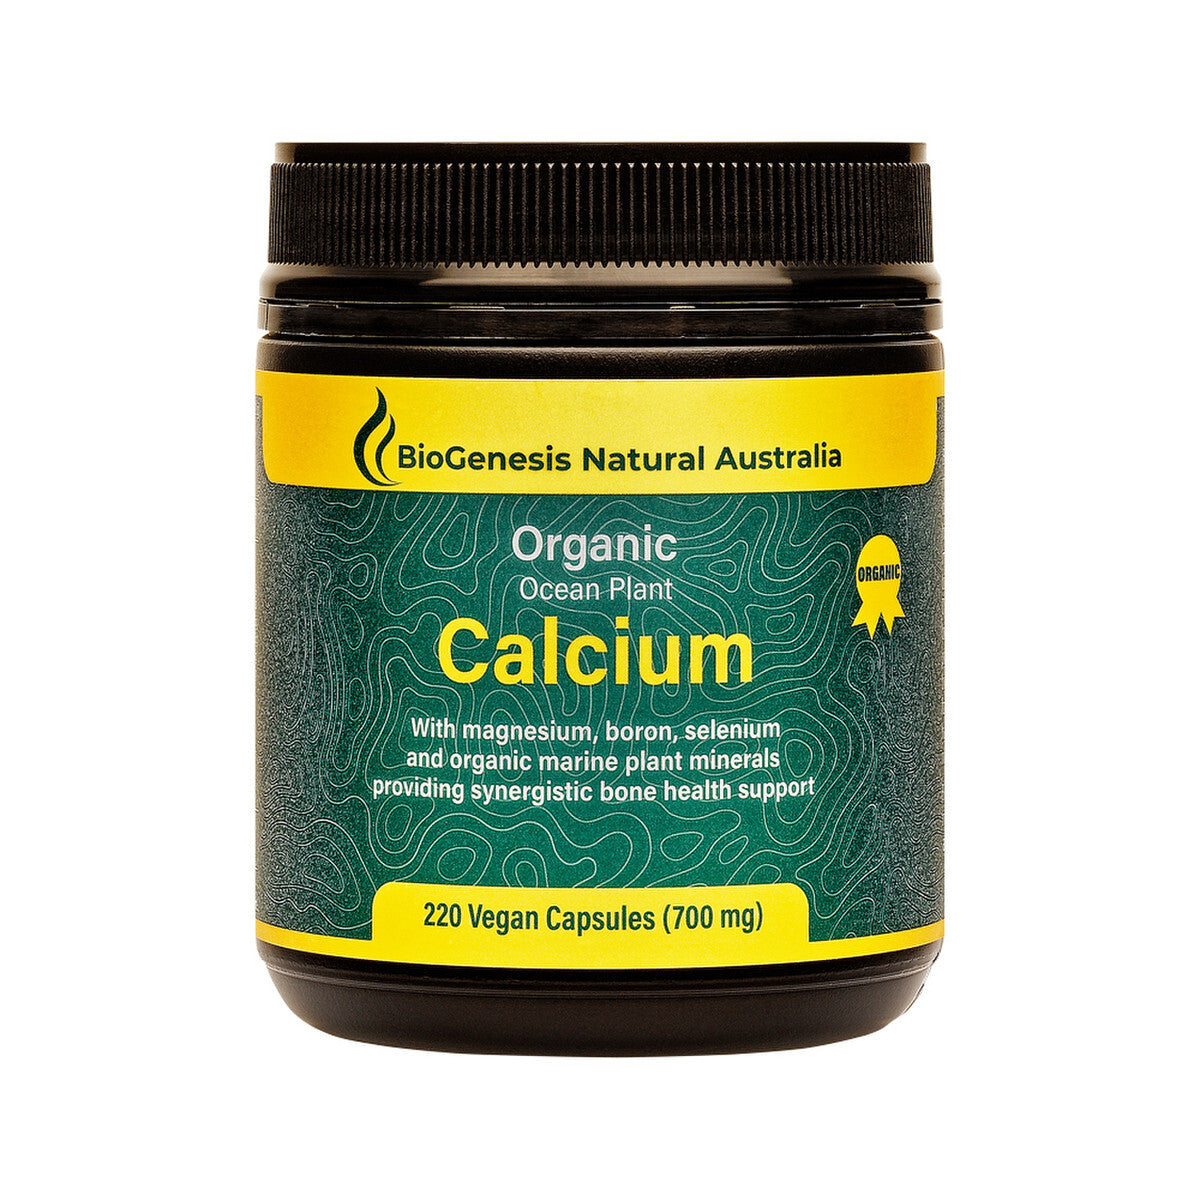 BioGenesis Natural Australia Organic Ocean Plant Calcium 700mg 220 Vege Capsules